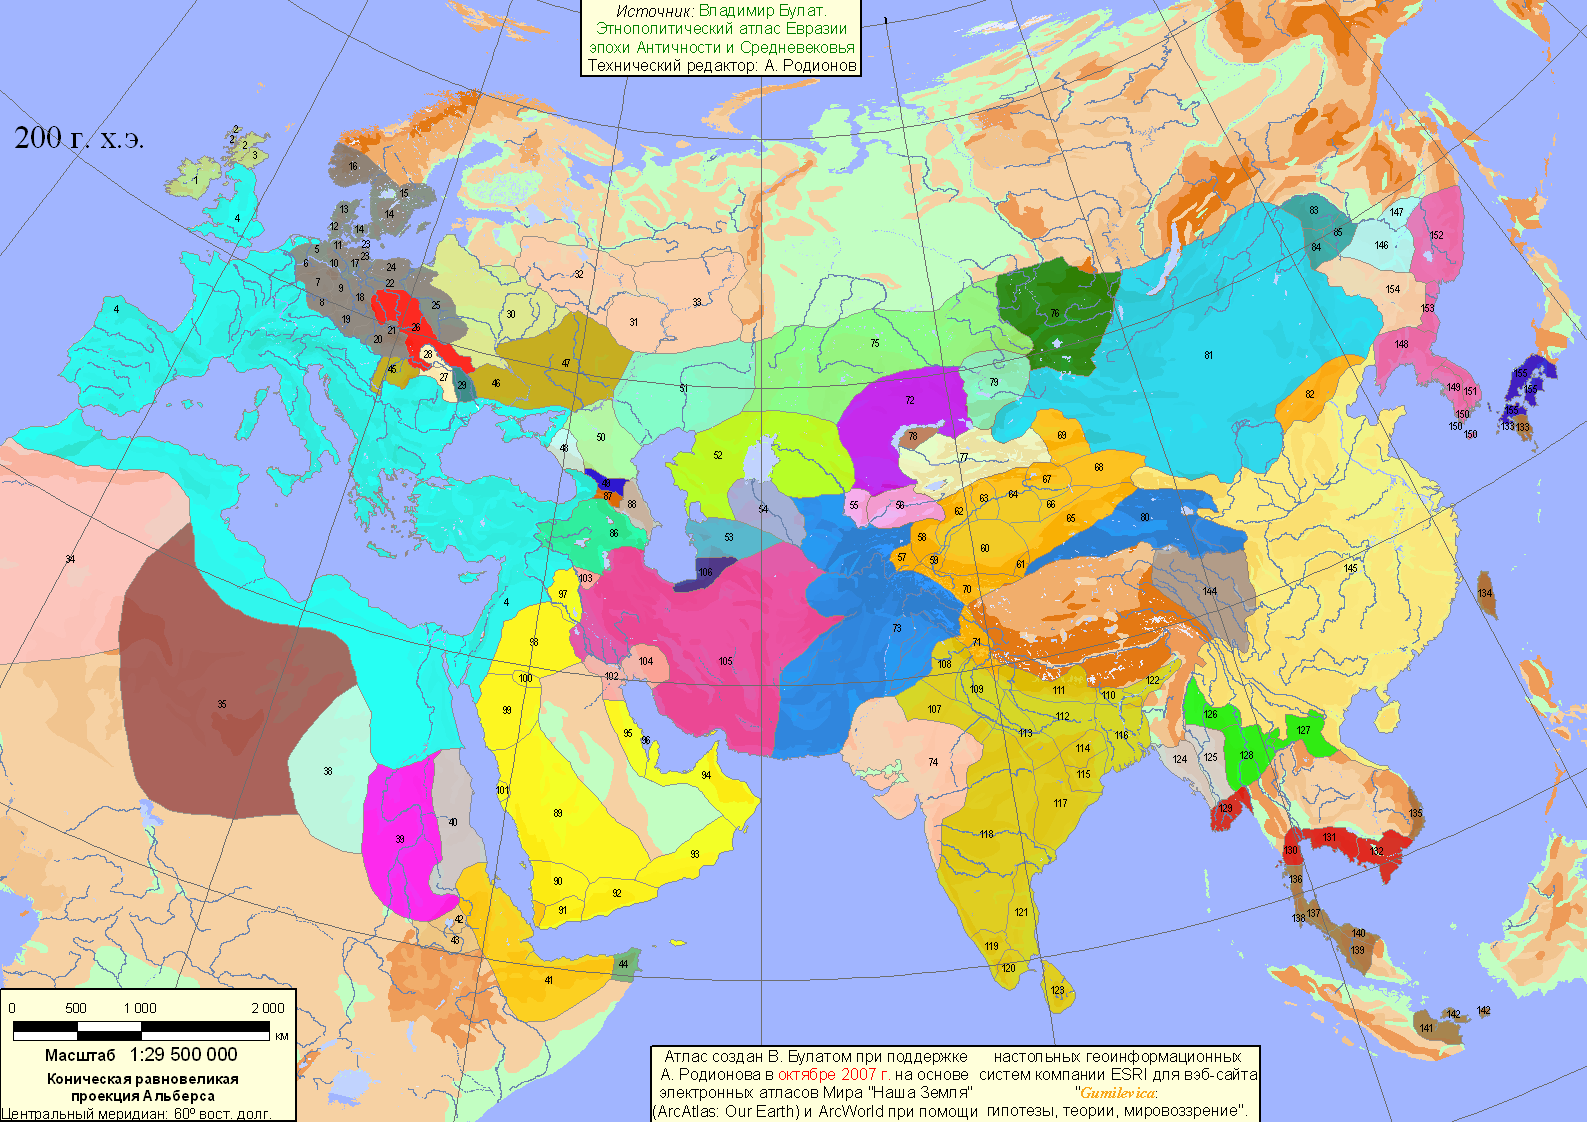 Eurasia - 200 AD (315 Kbytes)